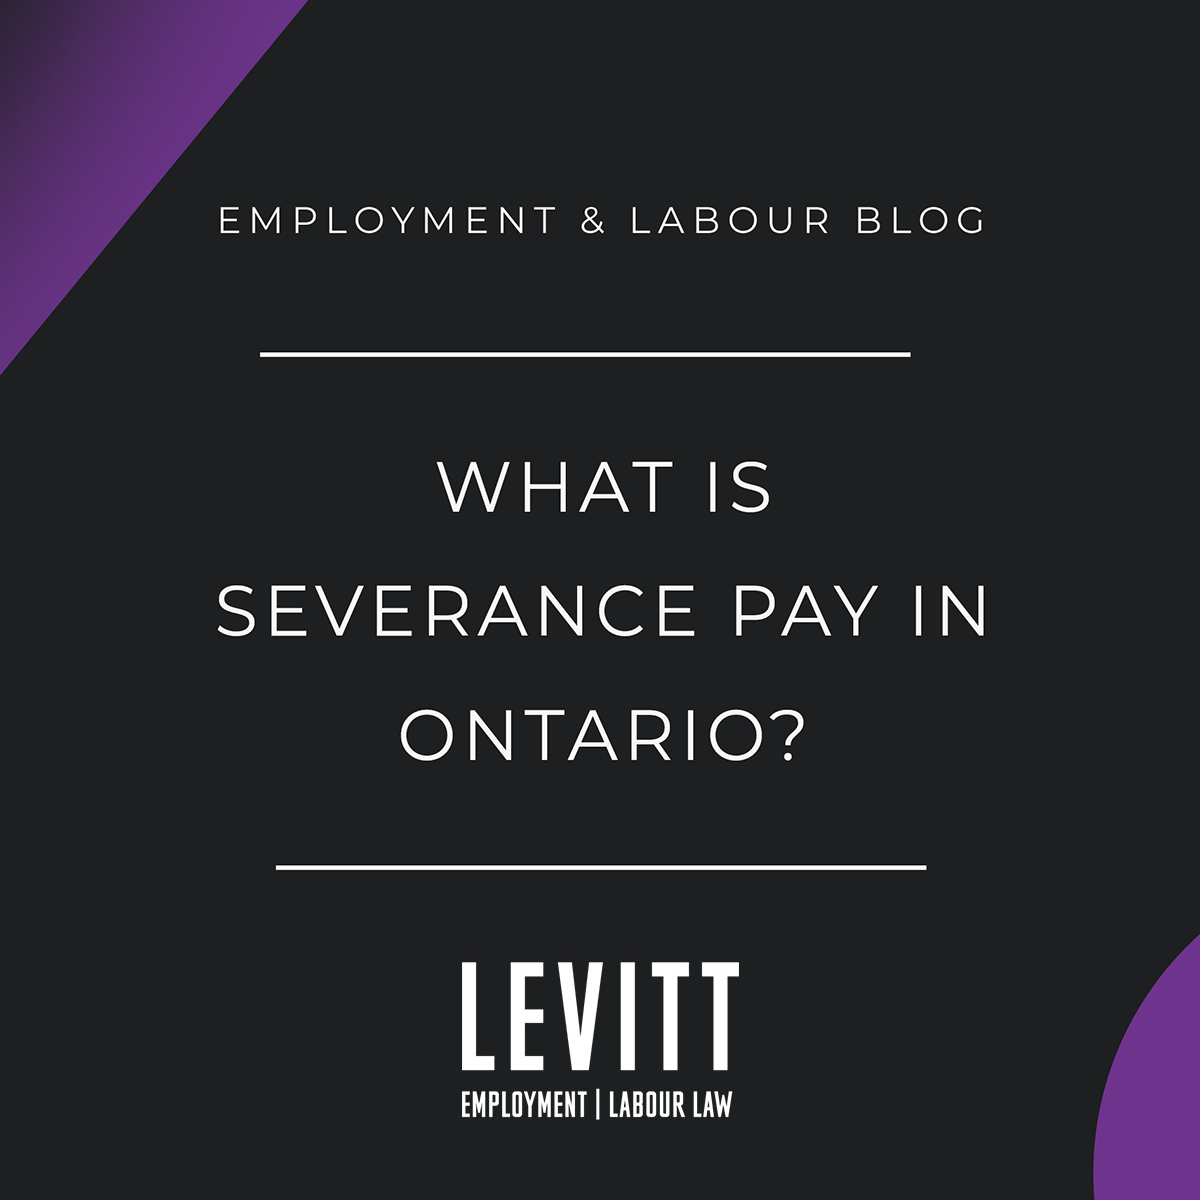 What is Severance Pay in Ontario? - Levitt Sheikh Employment